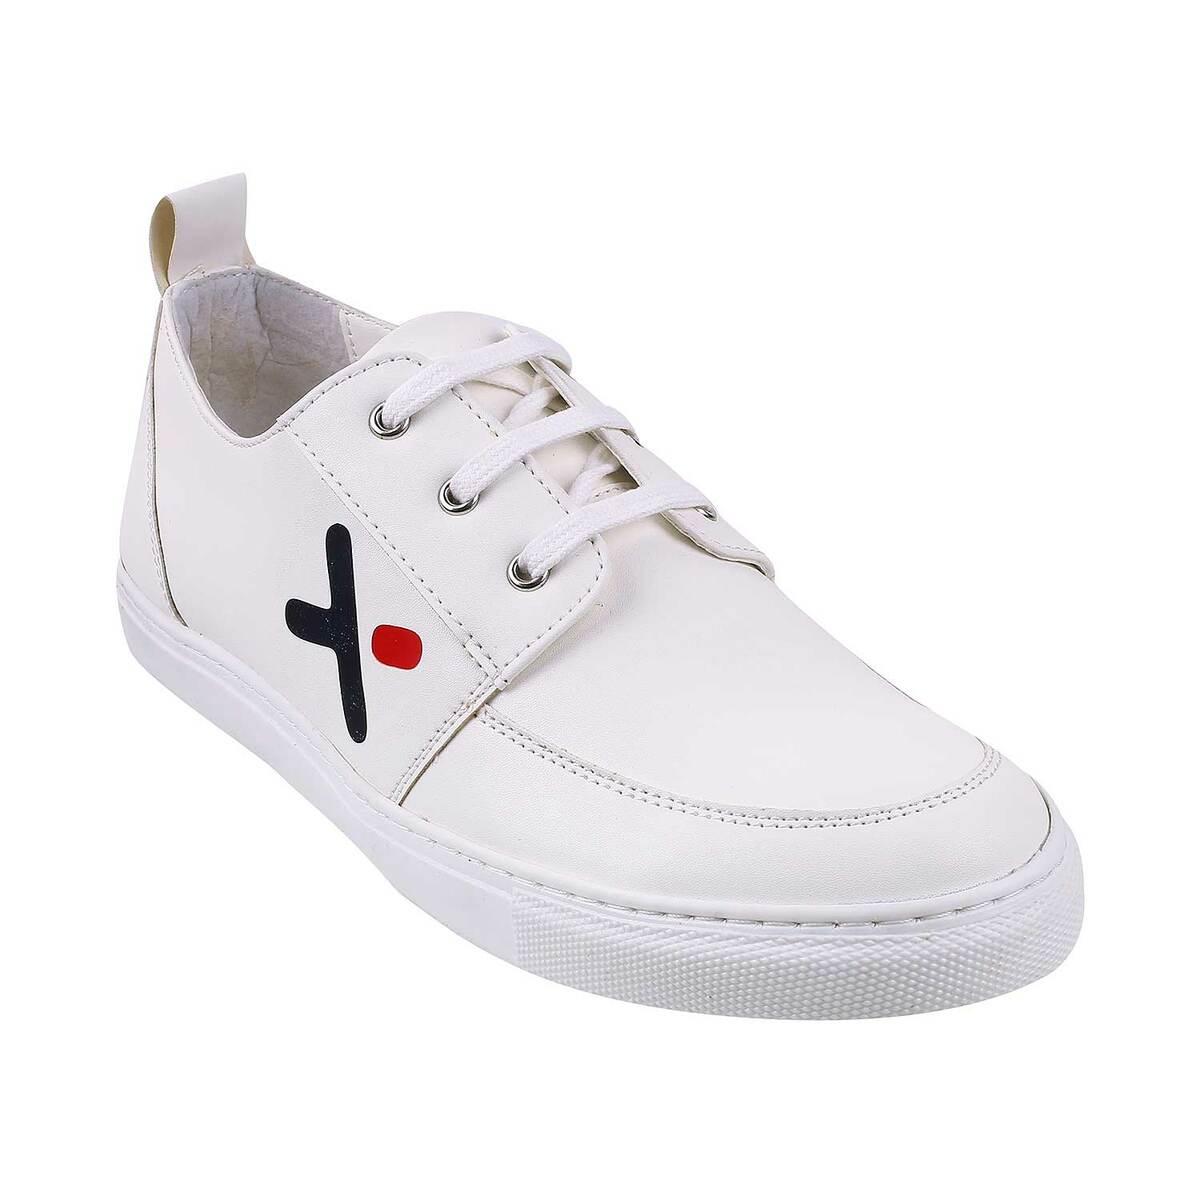 Buy MACTREE Men's Sneakers Walking Shoe (Grey-Black, Numeric_6) at Amazon.in